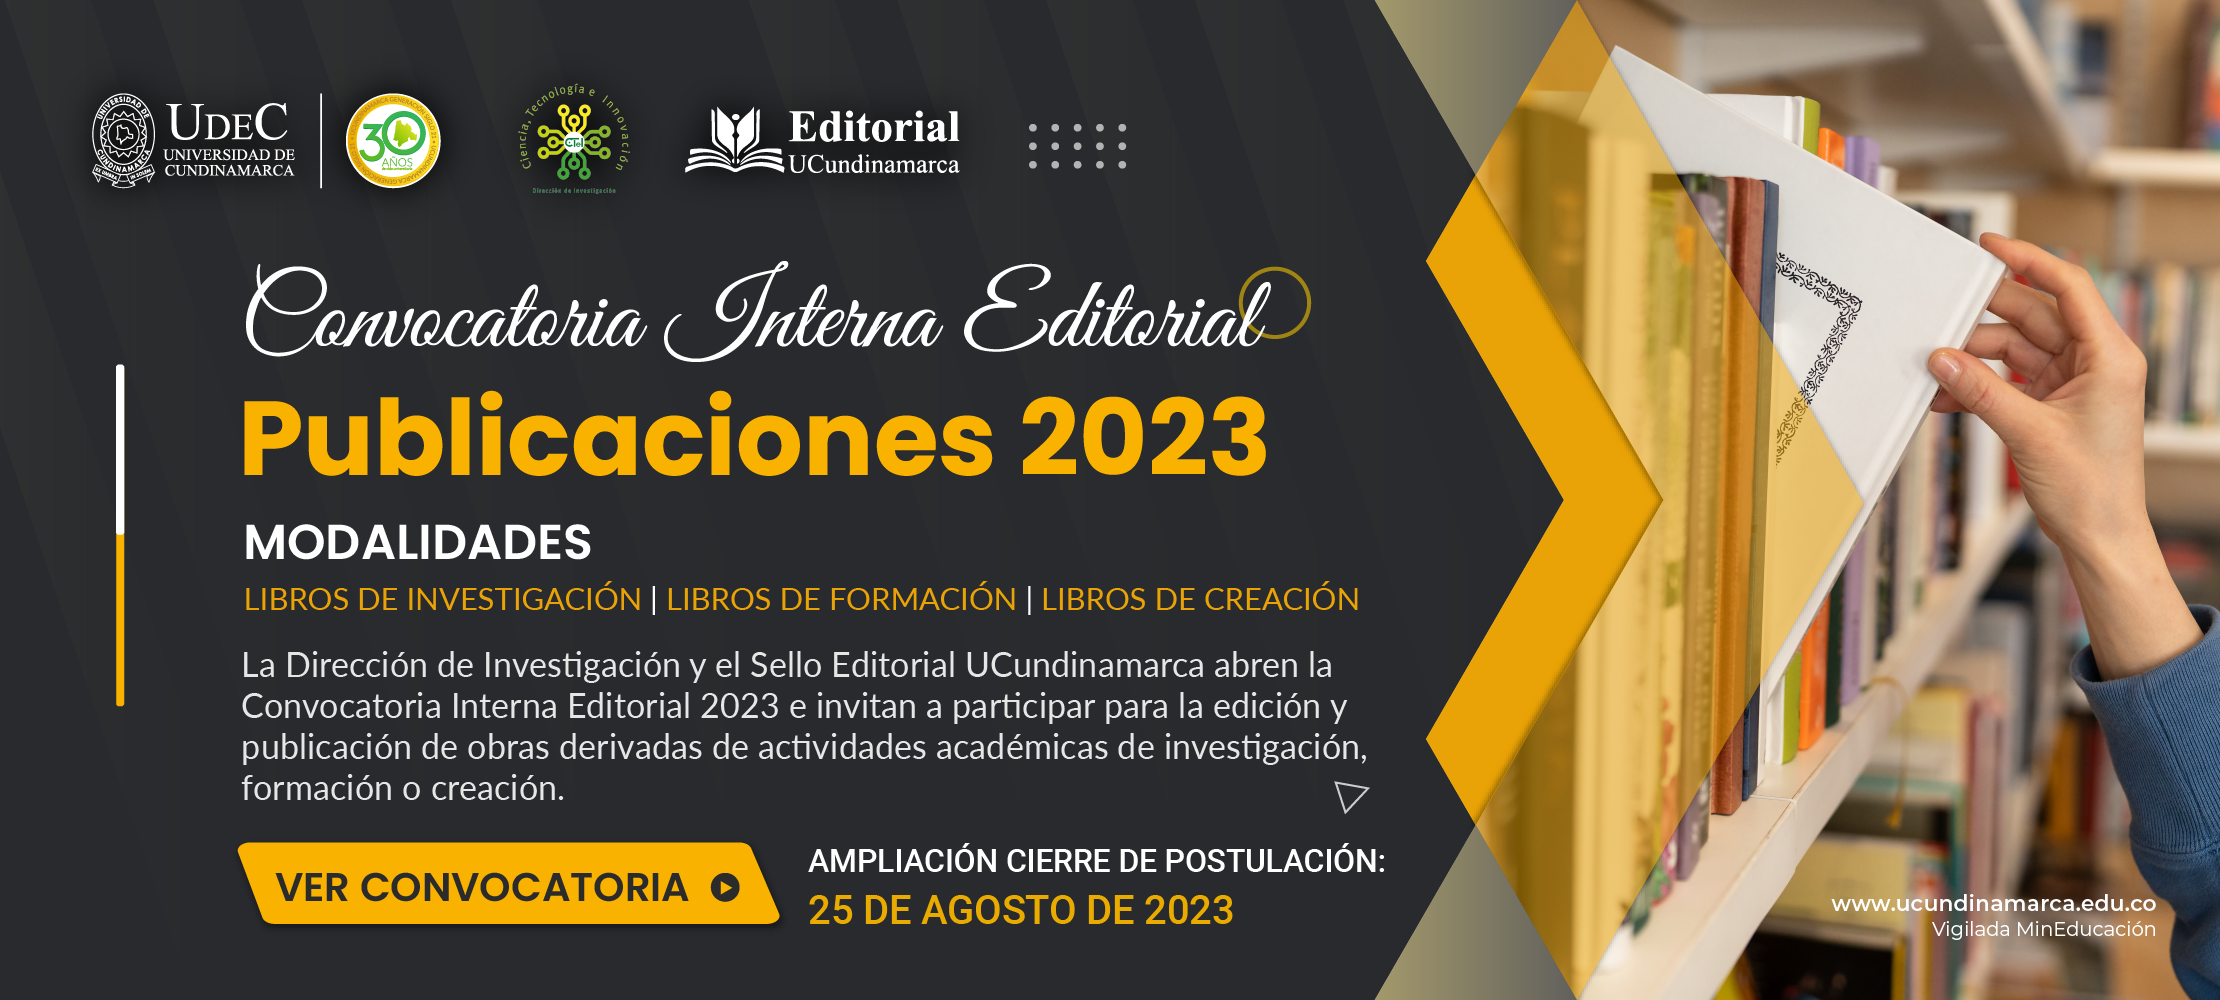 Nuevo_Banner_convocatoria_interna_editorial_2023